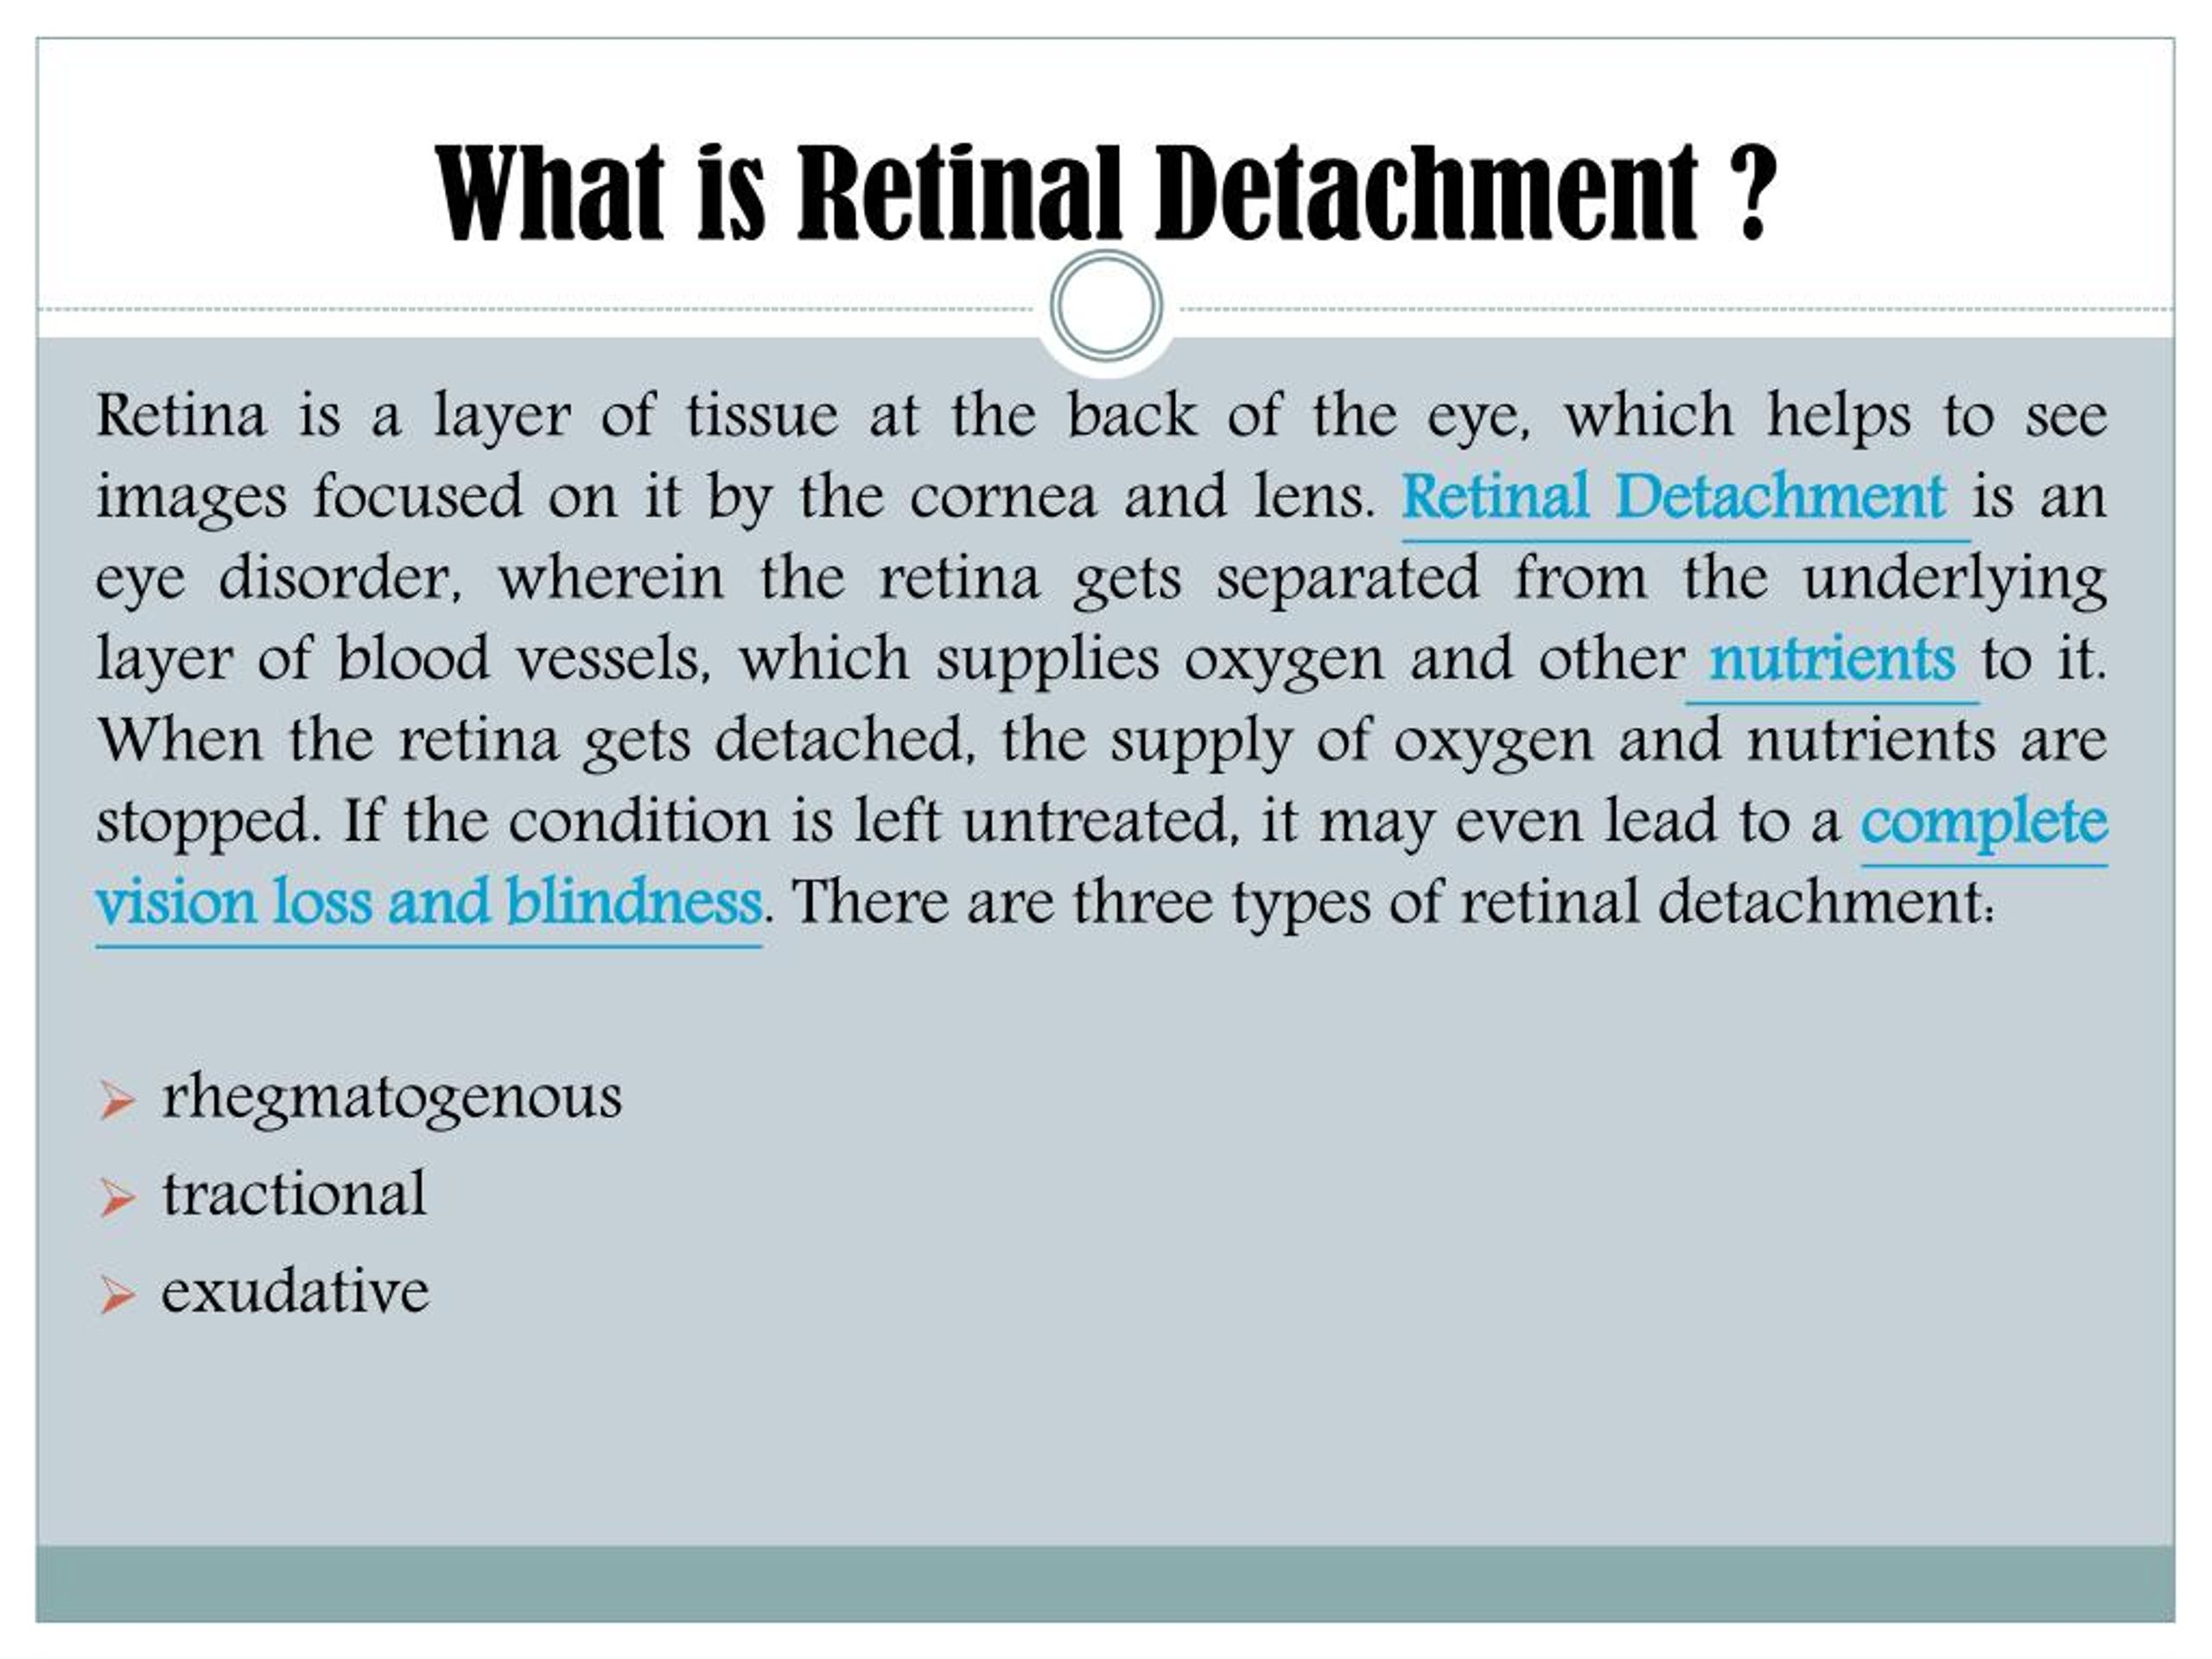 causes and symptoms of detached retina